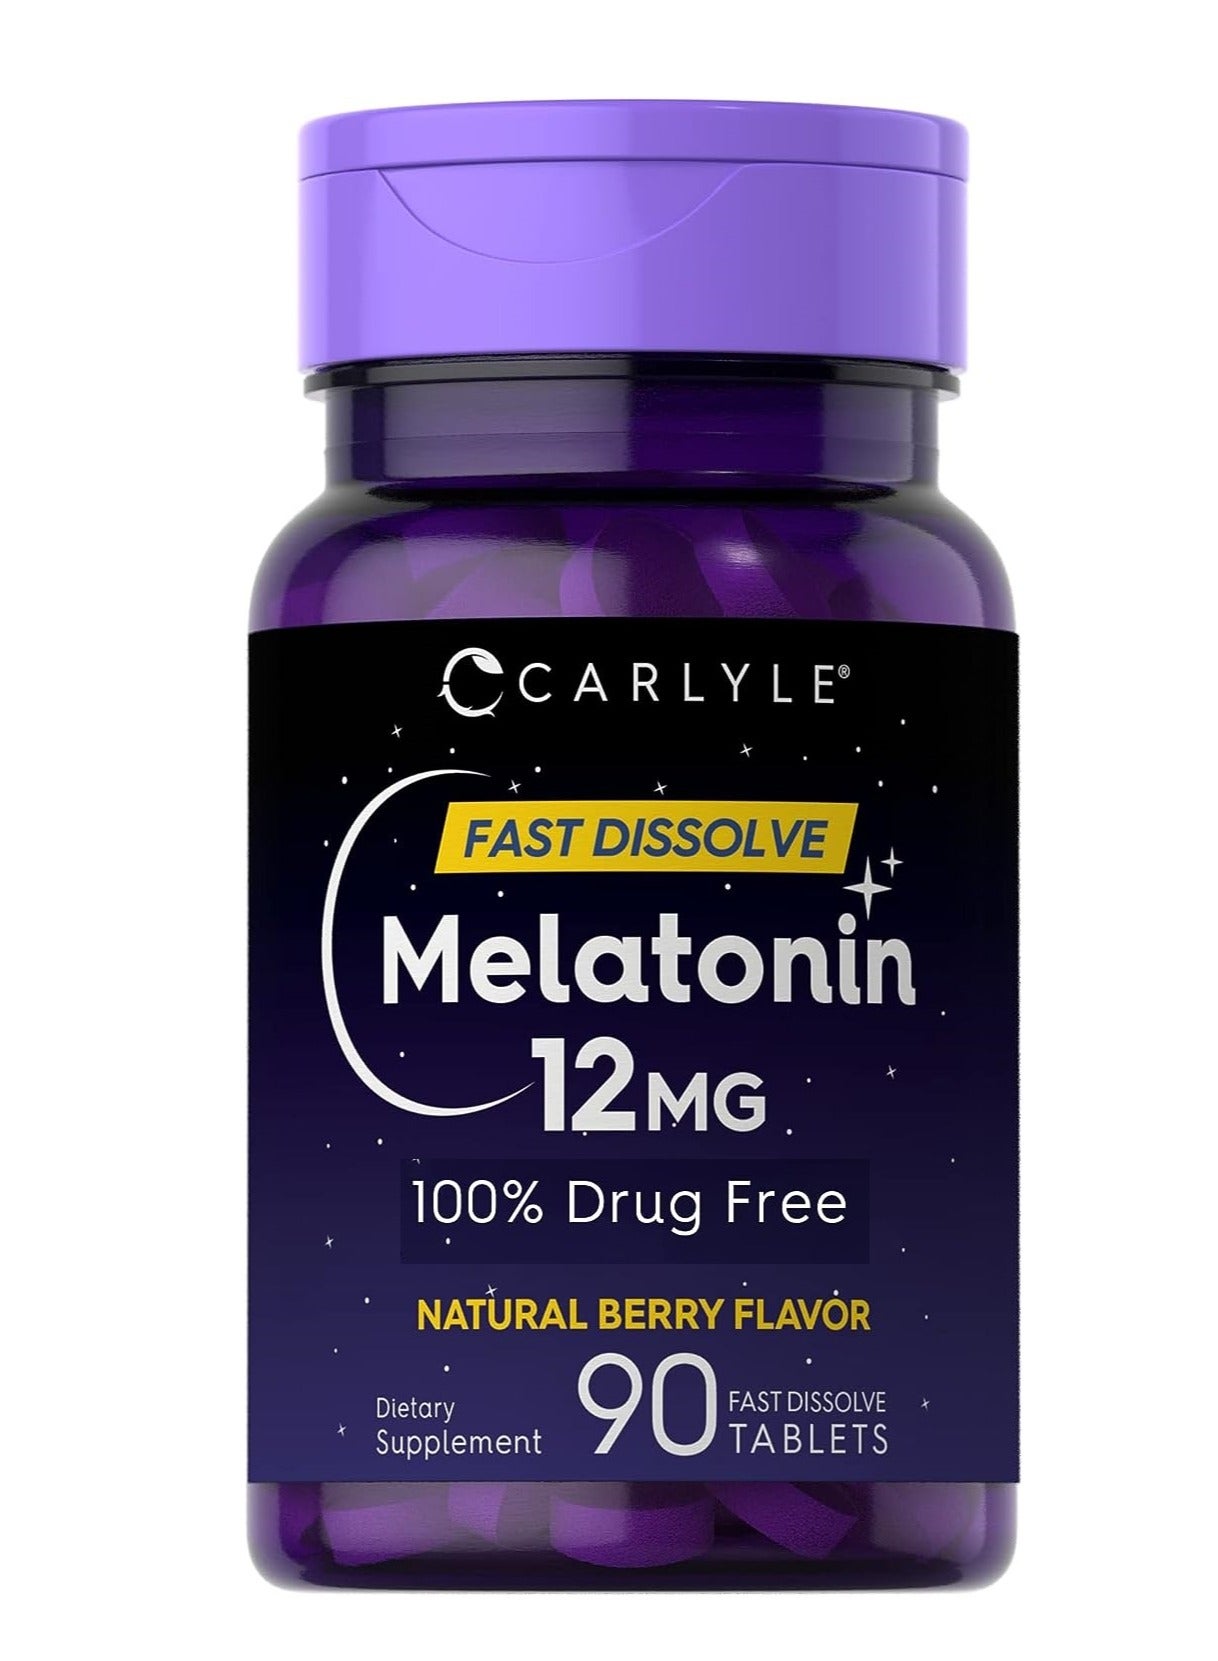 Carlyle Melatonin 12 mg Fast Dissolve 90 Tablets, Natural Berry Flavor Vegetarian, Non-GMO, Gluten Free 